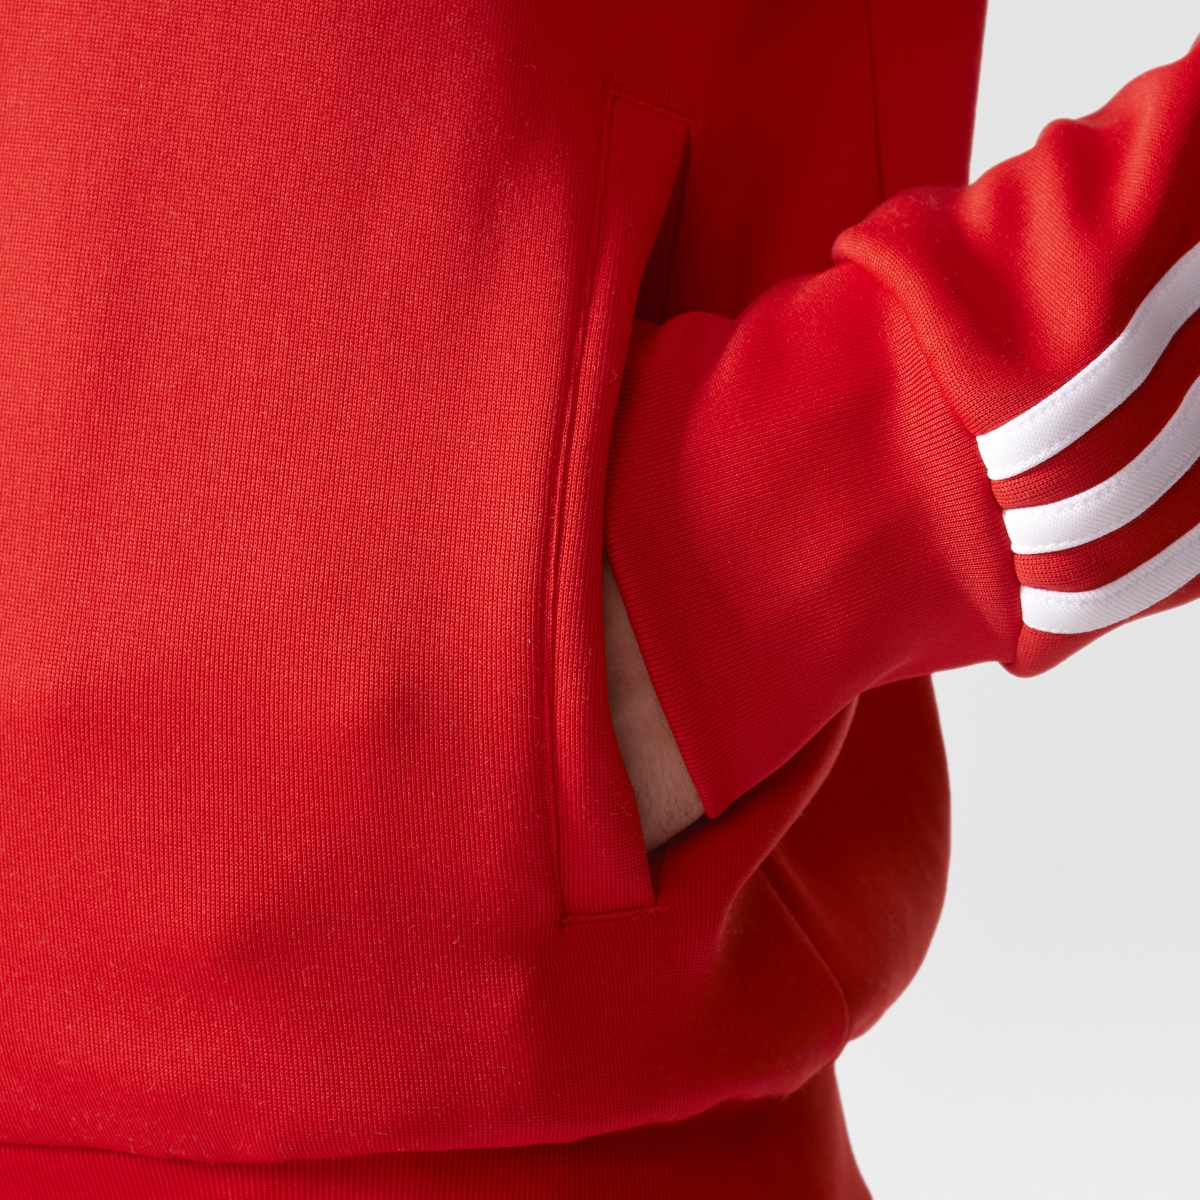 Adidas Originals Superstar Men's Track Jacket Vivid Red/White ay7062 - image 4 of 5